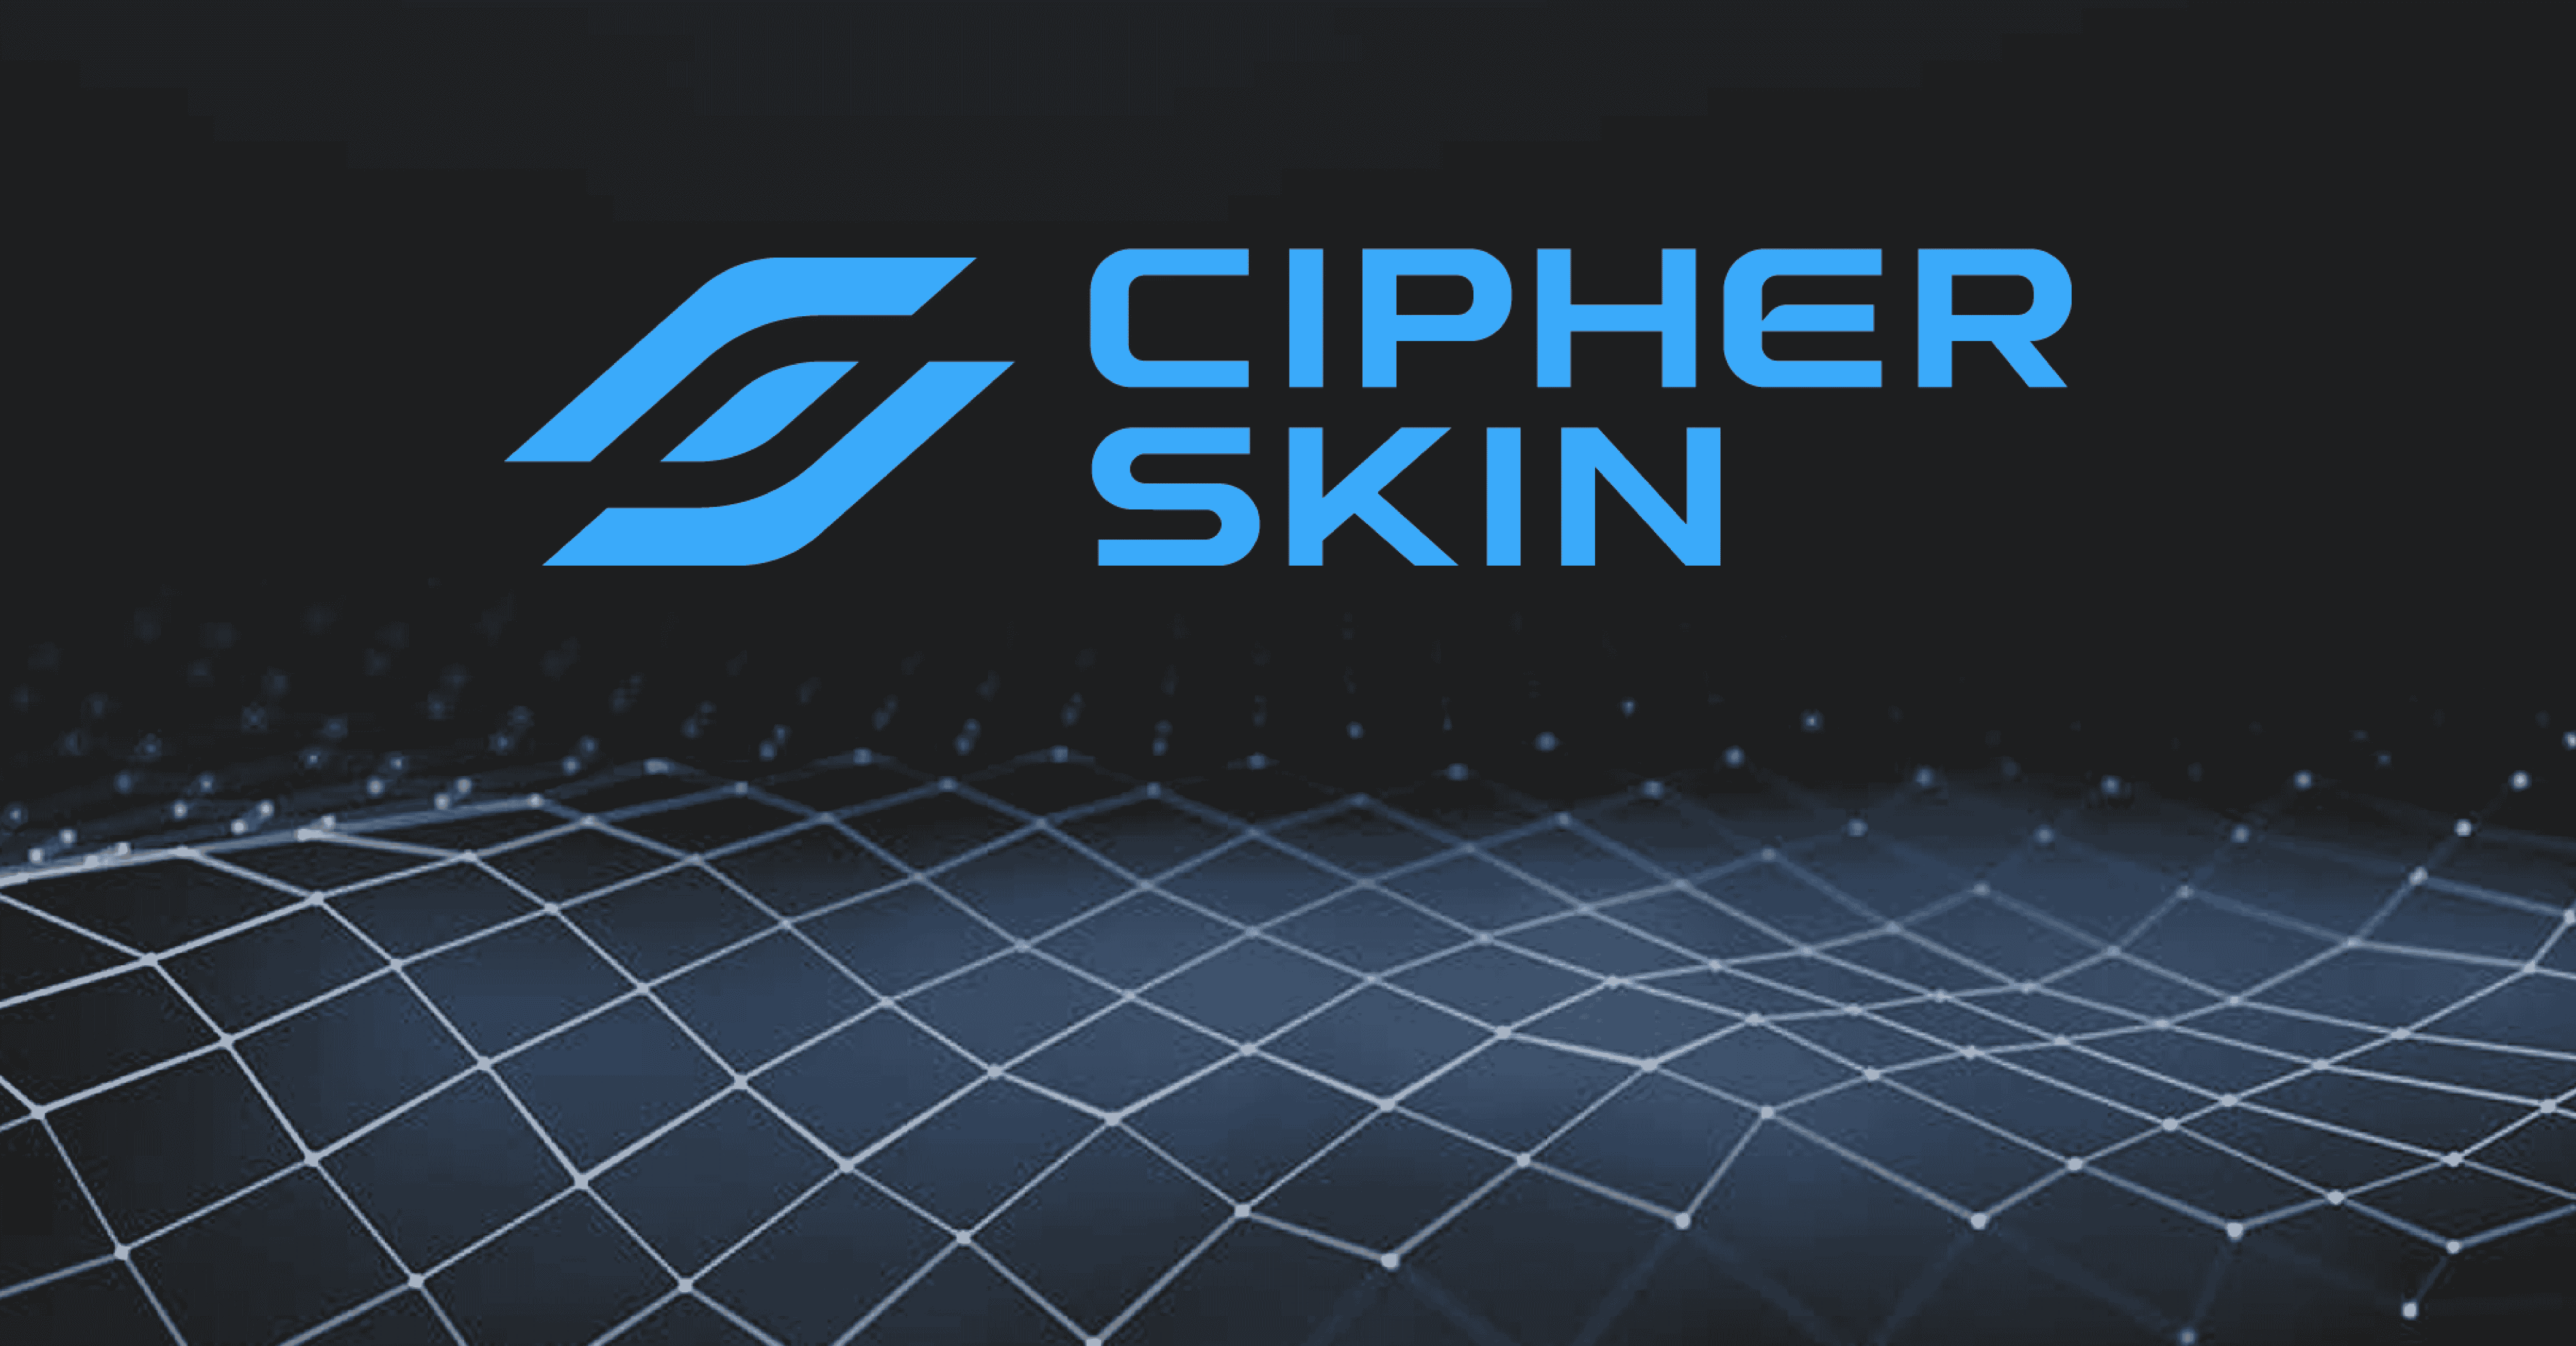 The Cipher Skin logo.